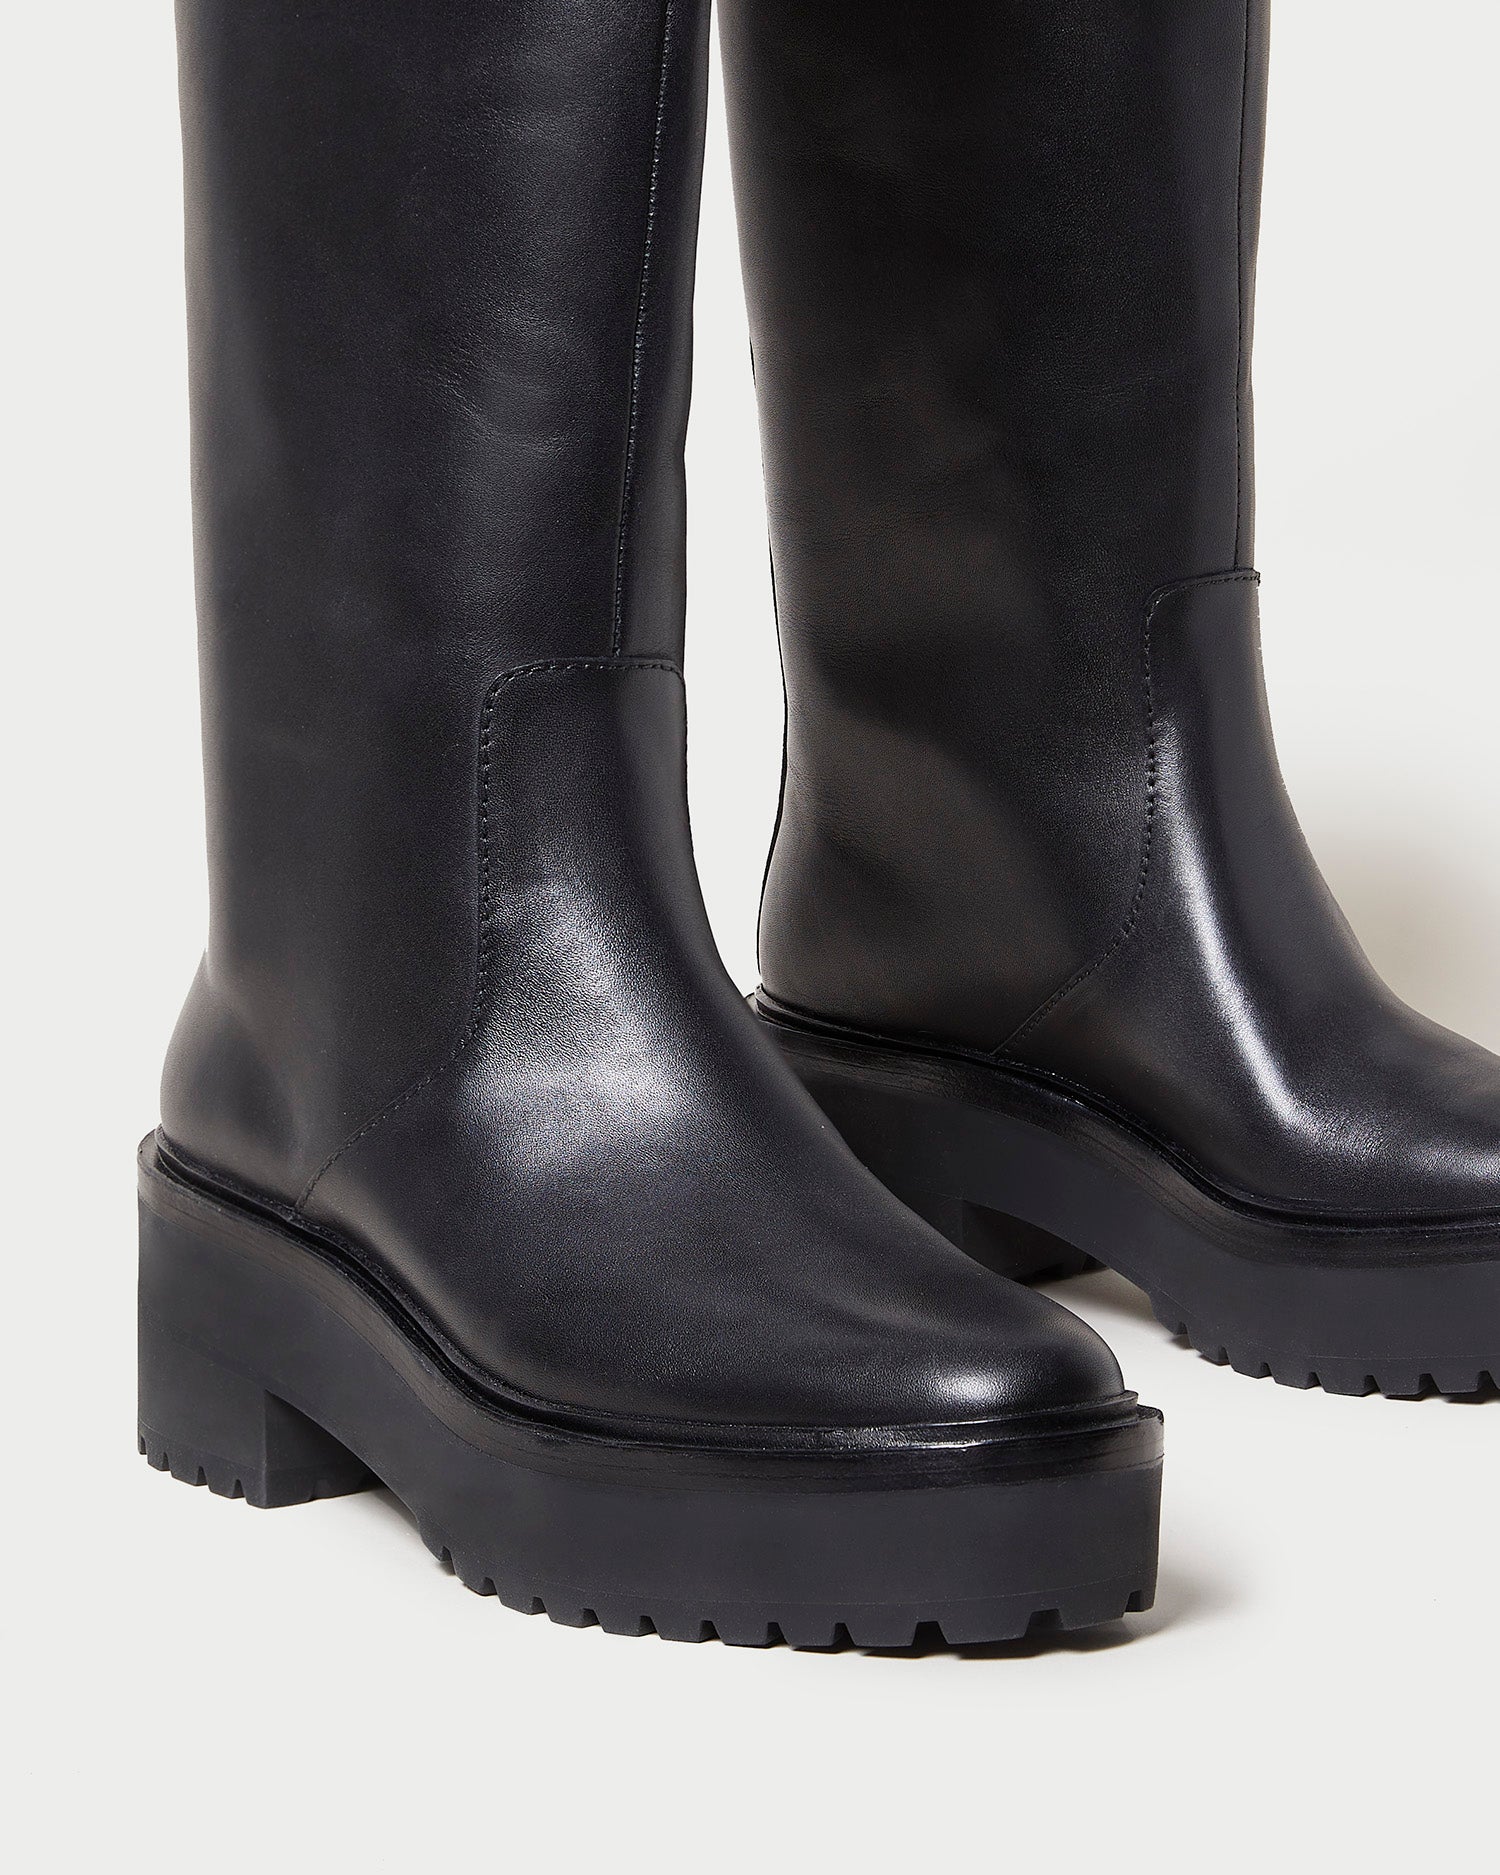 black riding boots, 14 Shades Of Grey